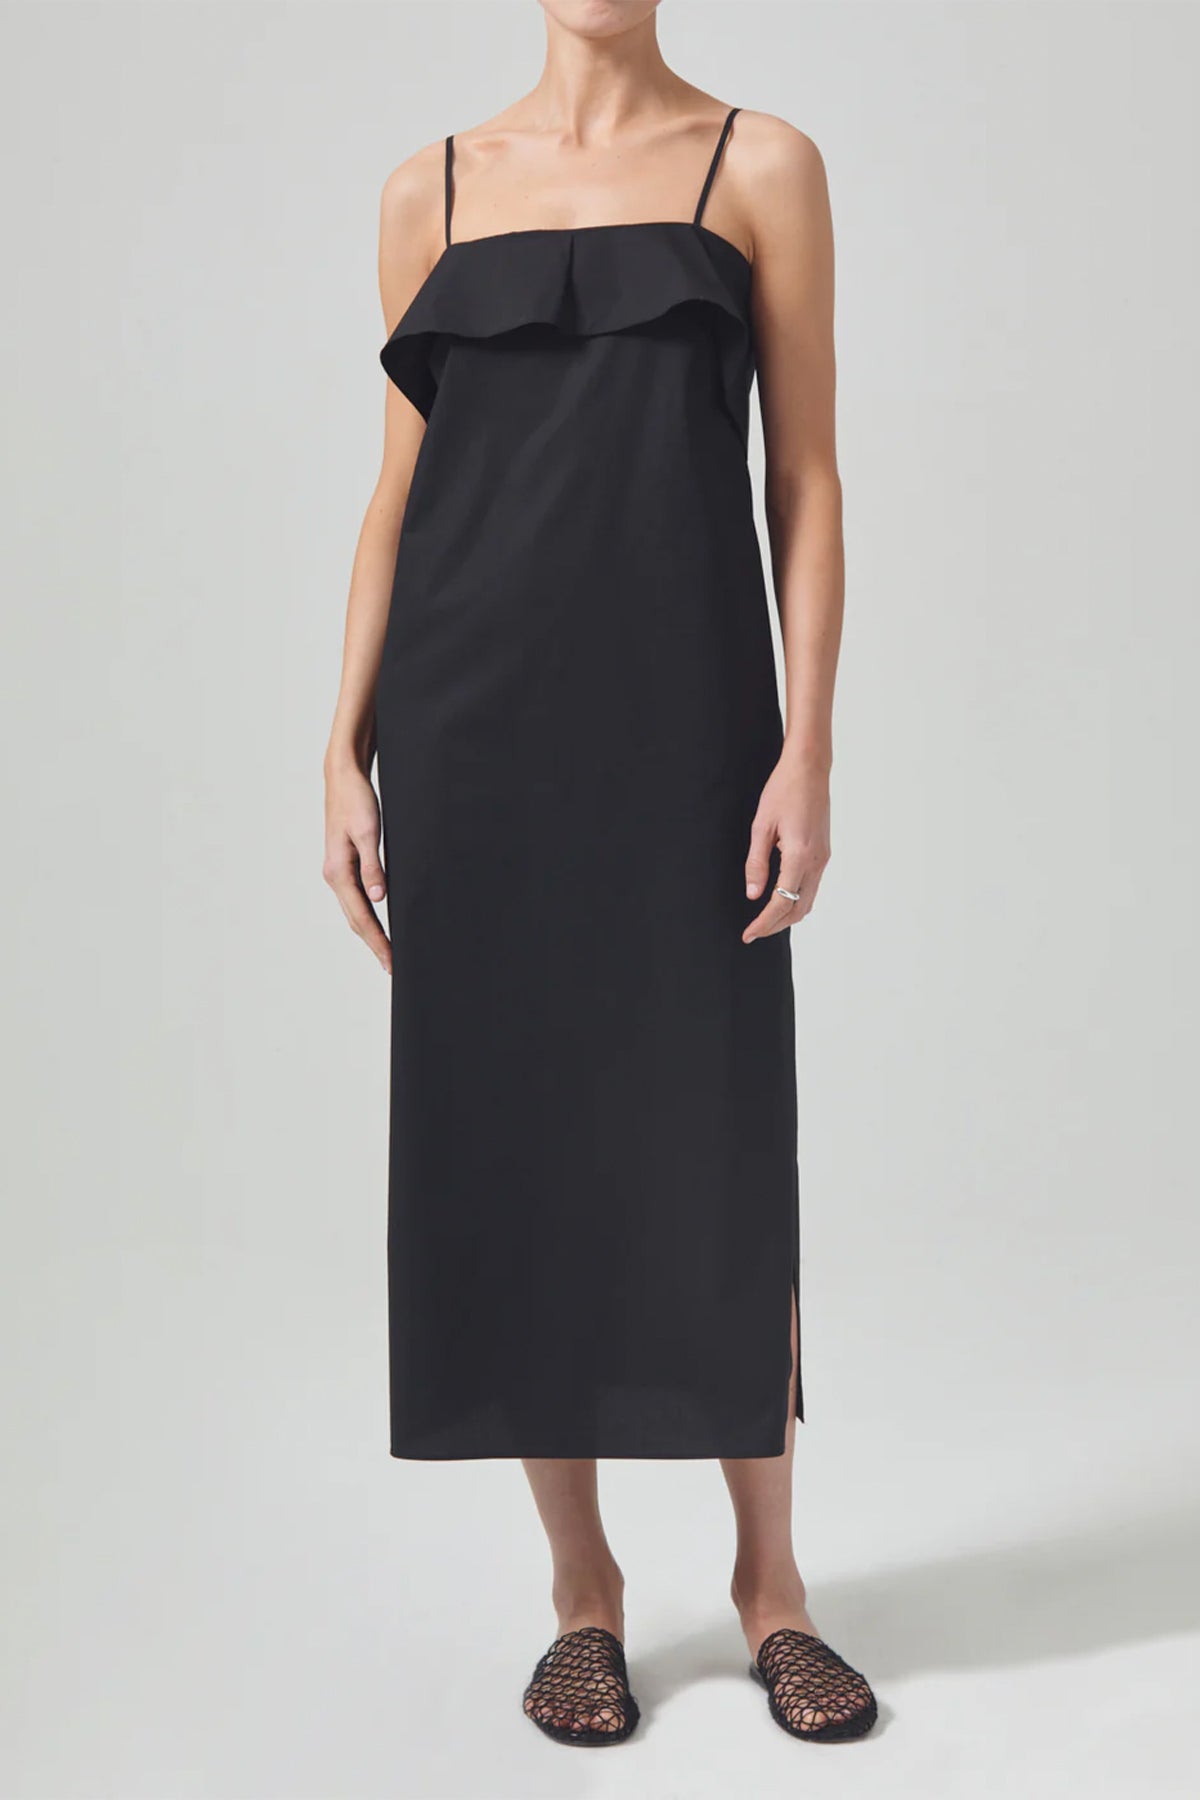 Sable Flounce Dress in Black - shop-olivia.com